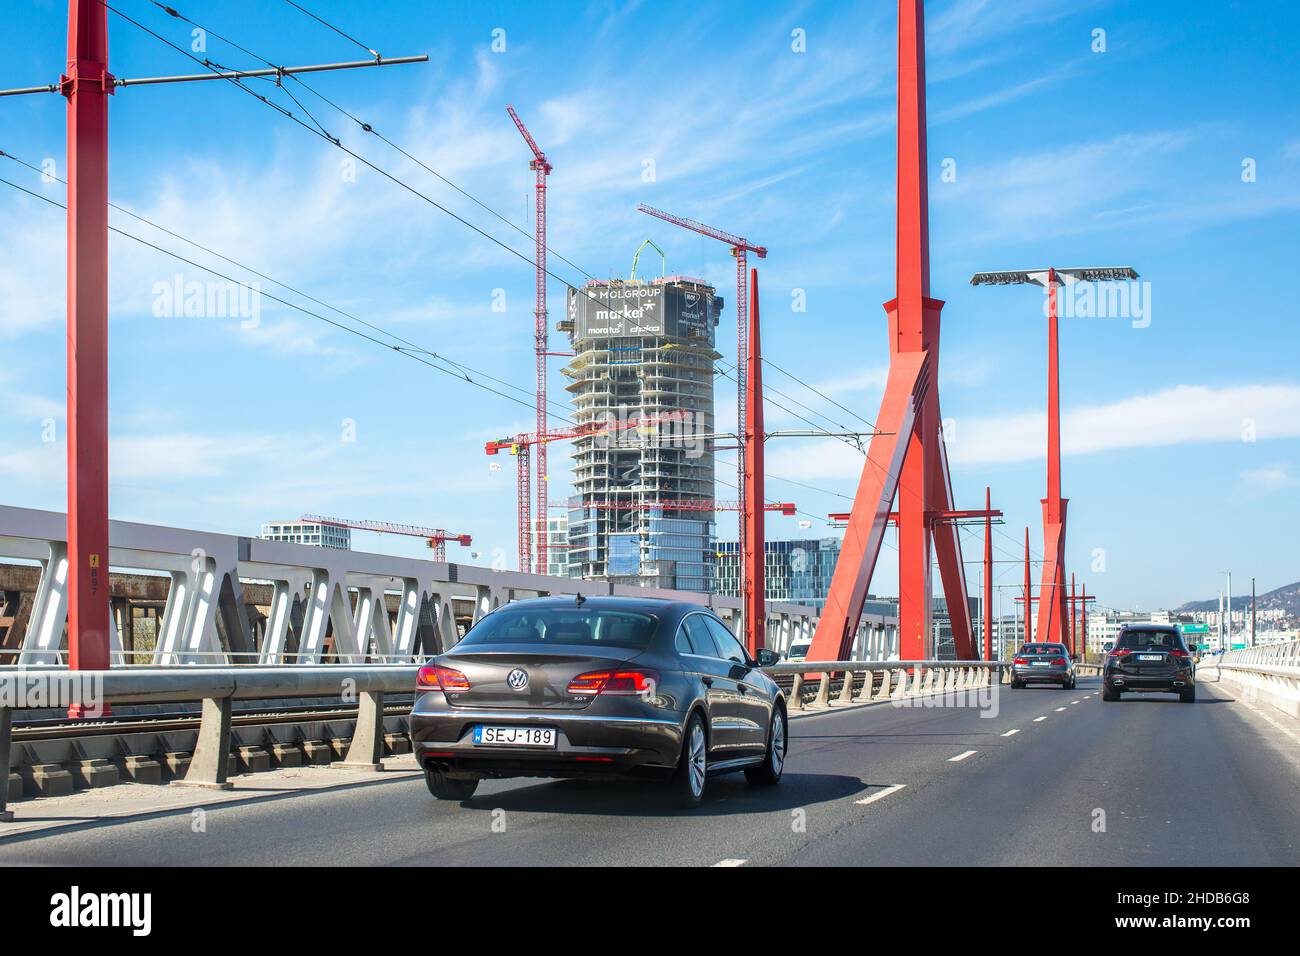 Budapest, Hungary - April 12, 2021: Traffic on Rakoczi Bridge in Budapest. Unfinished building and construction cranes on background Stock Photo